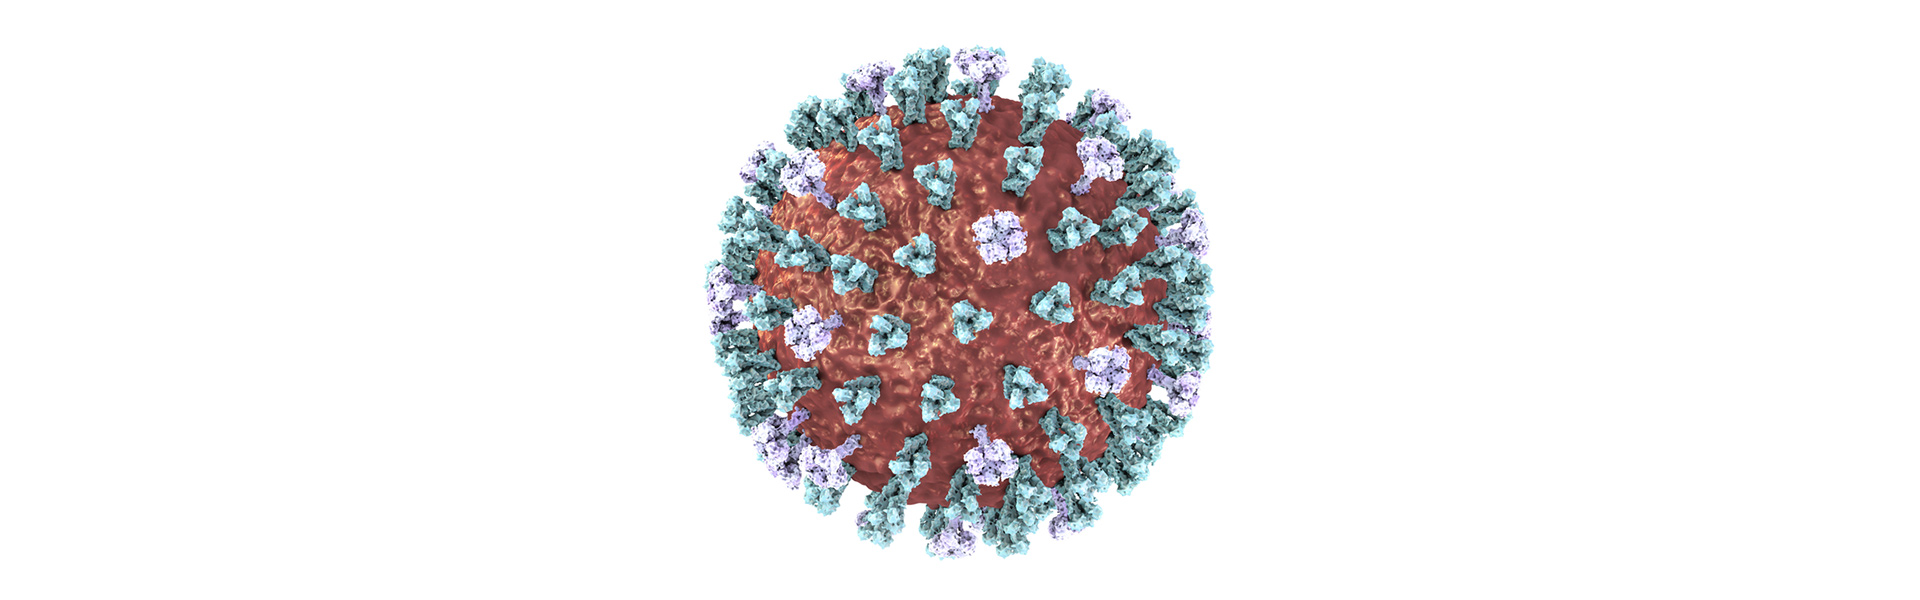 An Informative Guide to Understanding the Influenza Virus